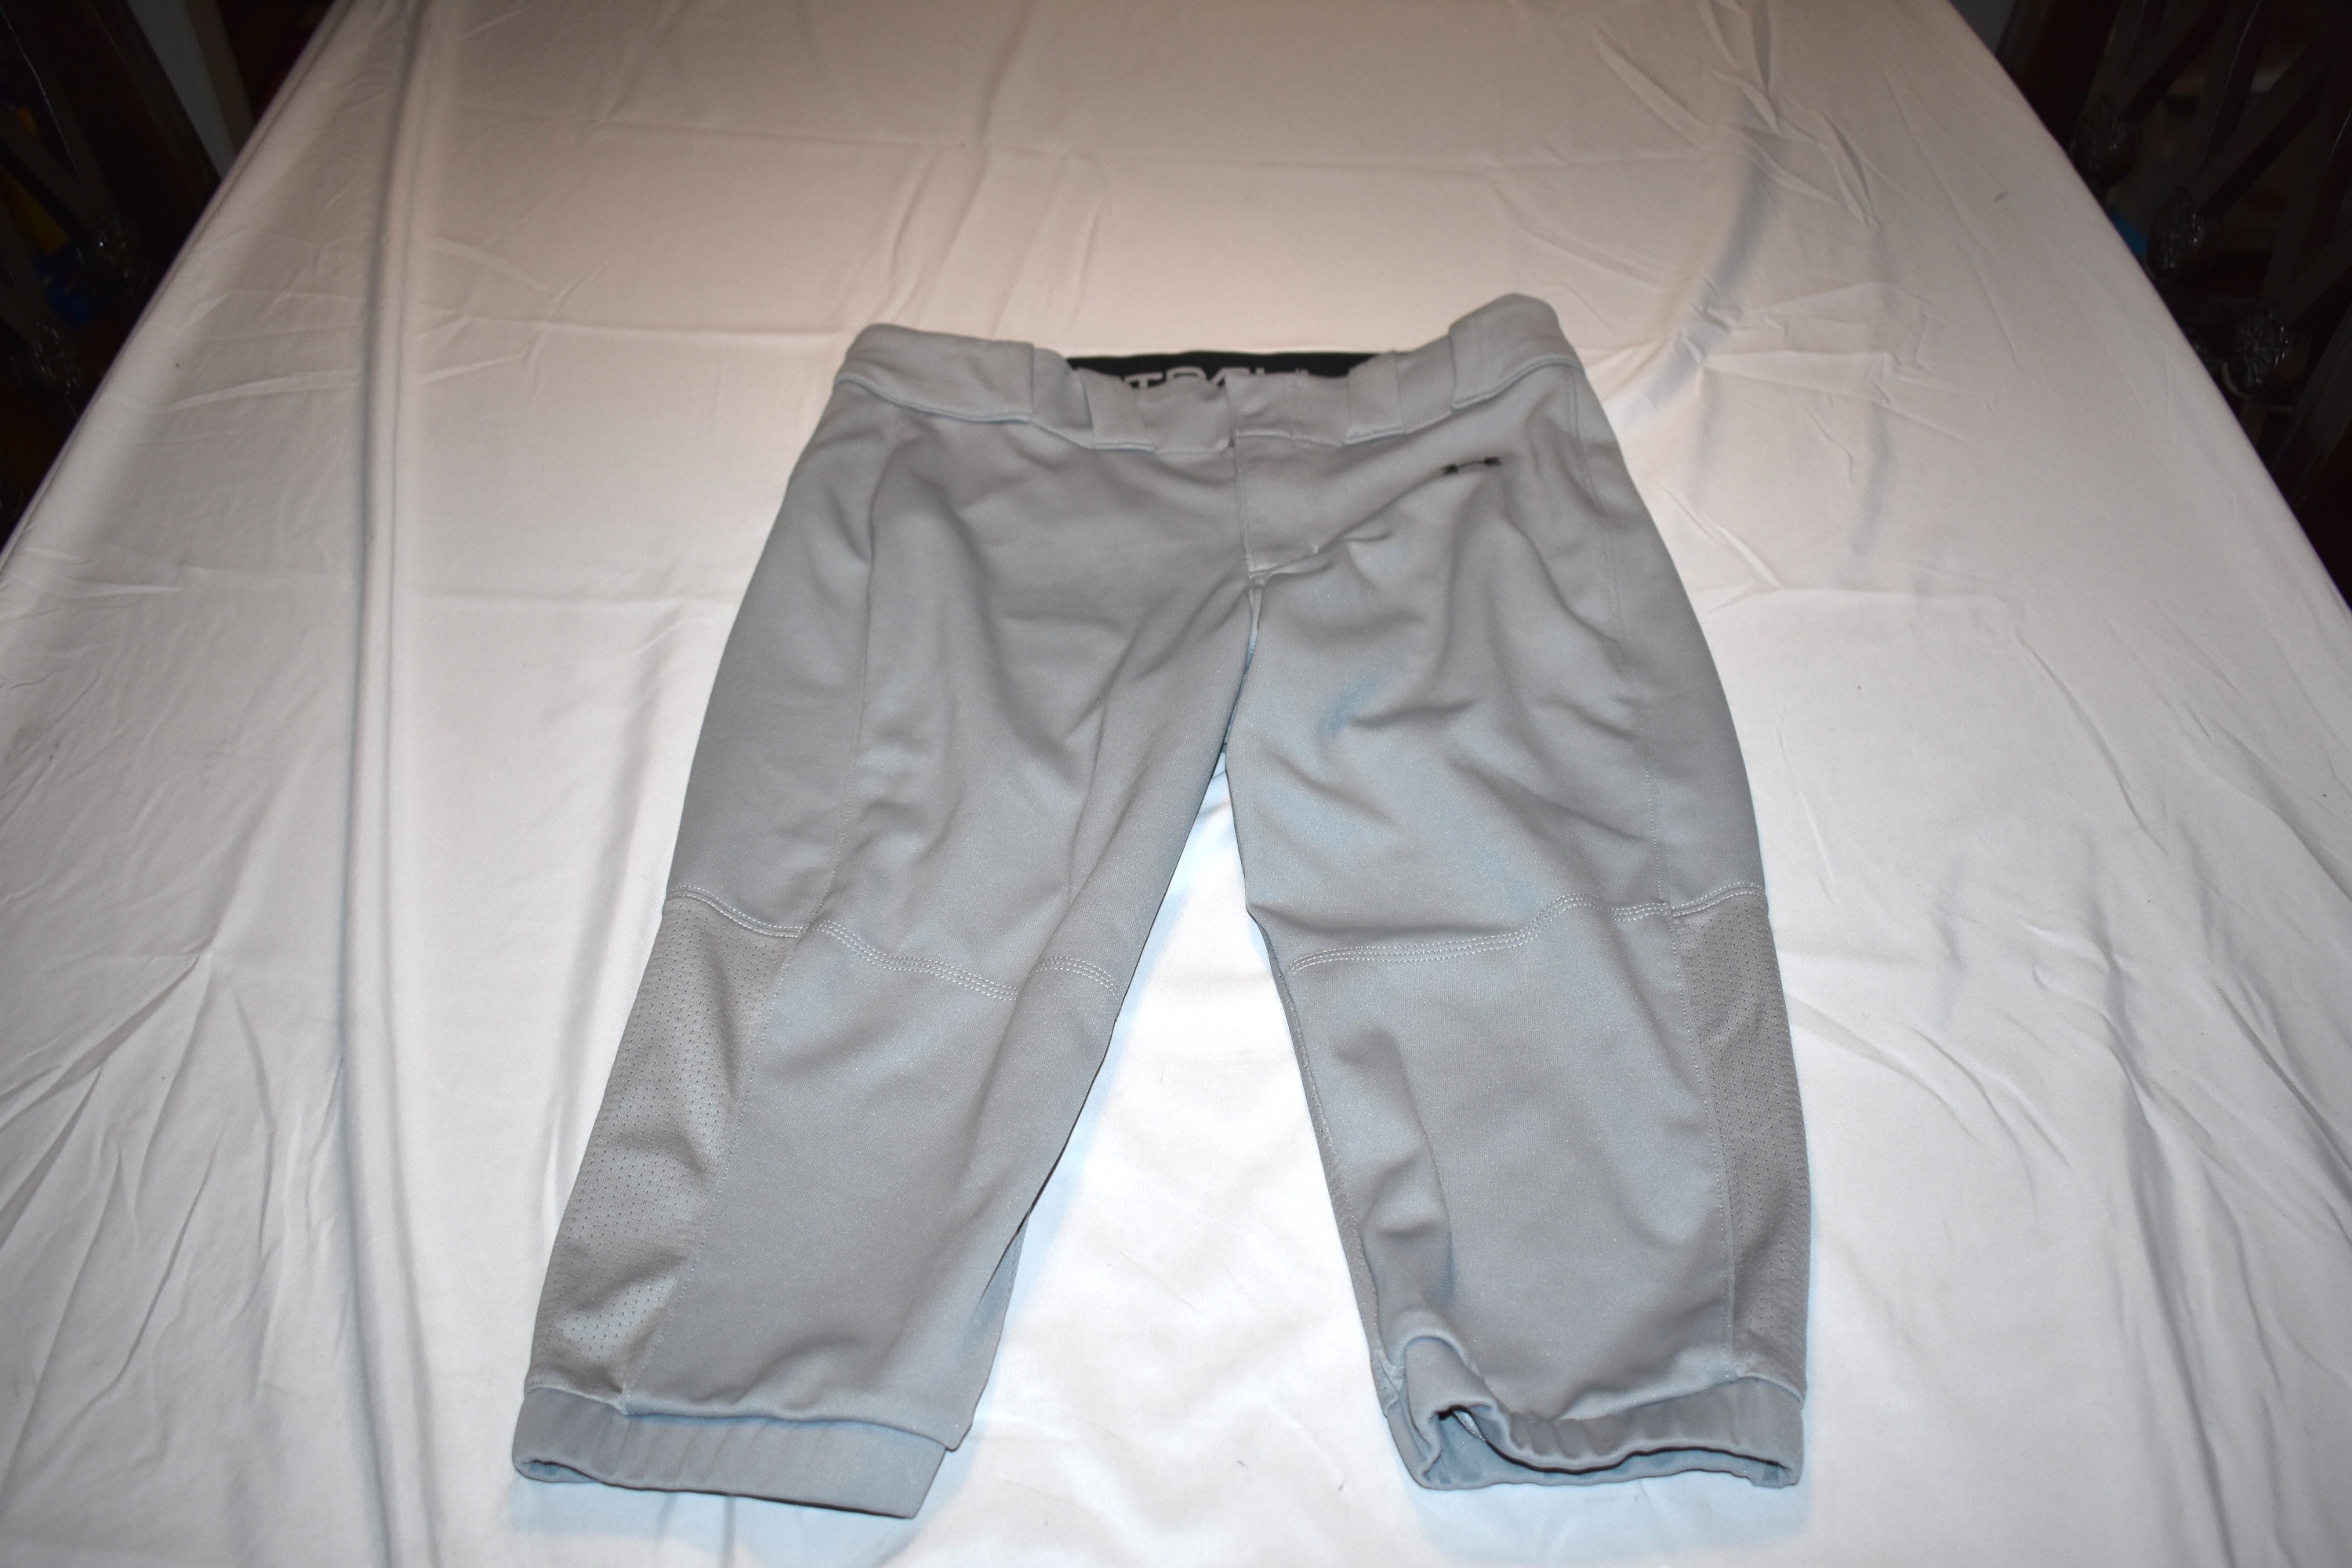 Under Armour Vanish Softball Pants 1356903, Gray, Adult Medium - Great Condition!